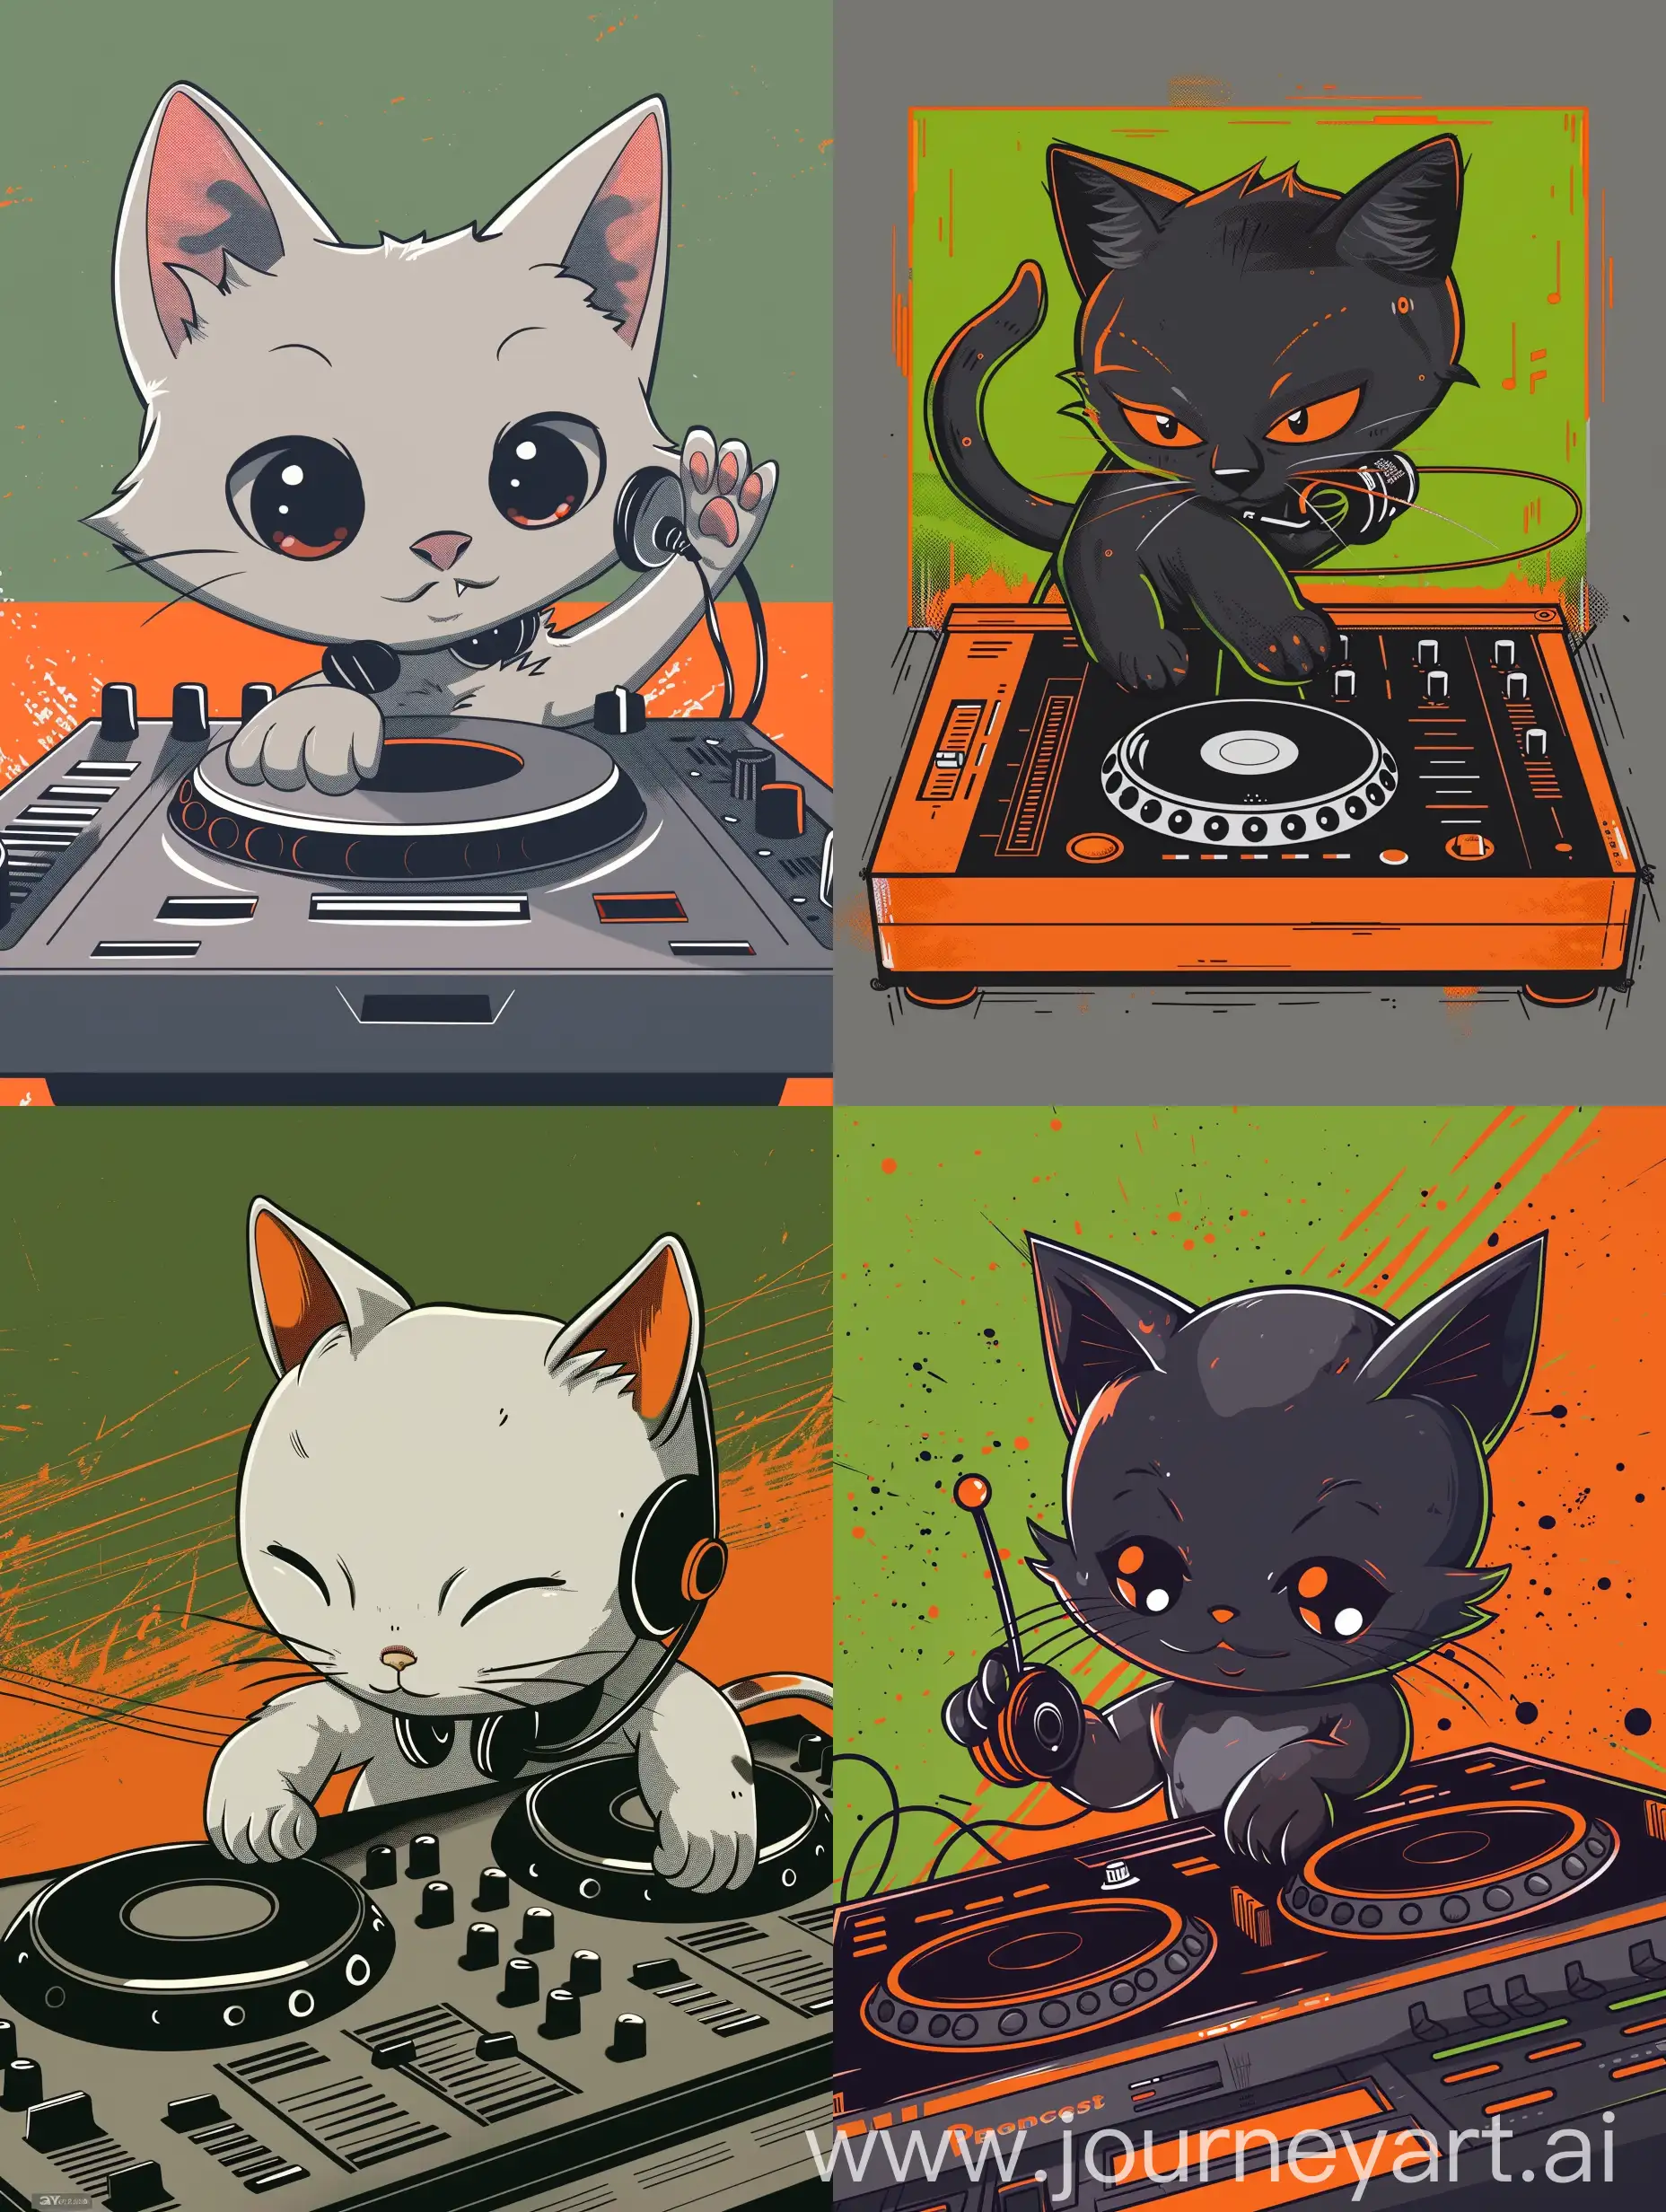 Chibi-Anime-Cat-DJ-with-Vibrant-Orange-and-Green-Background